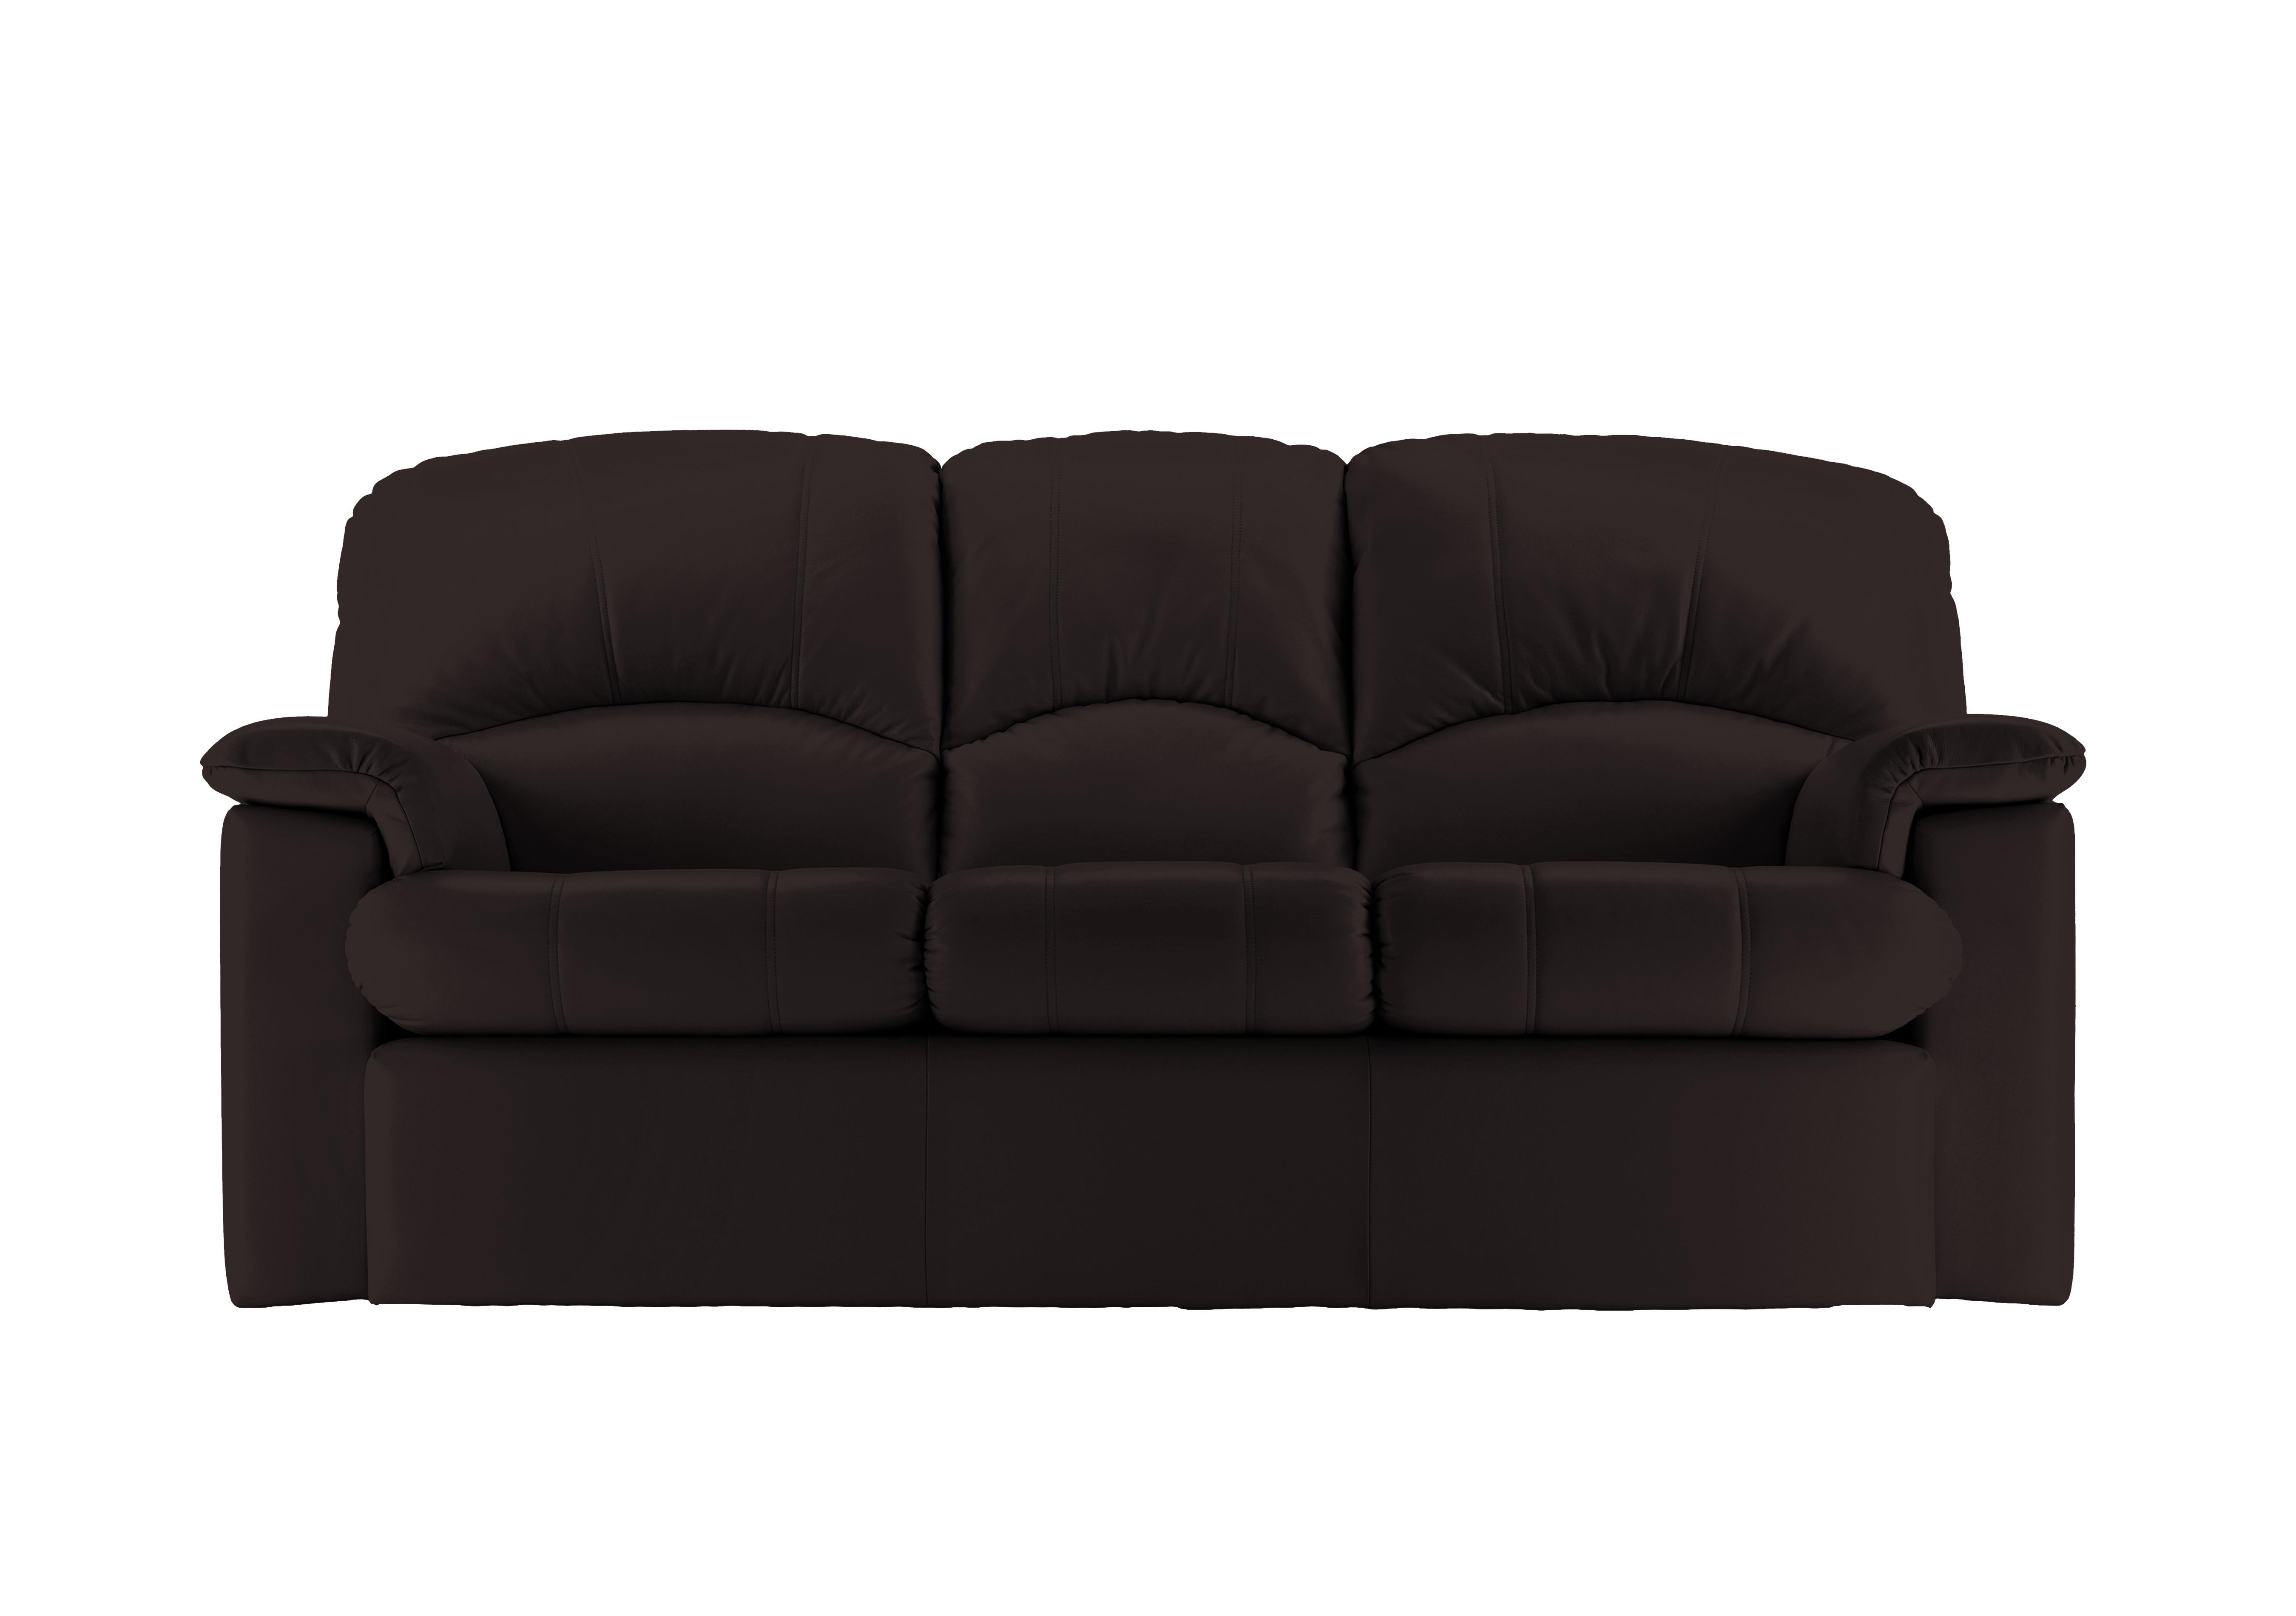 Chloe 3 Seater Leather Sofa in P200 Capri Chocolate on Furniture Village